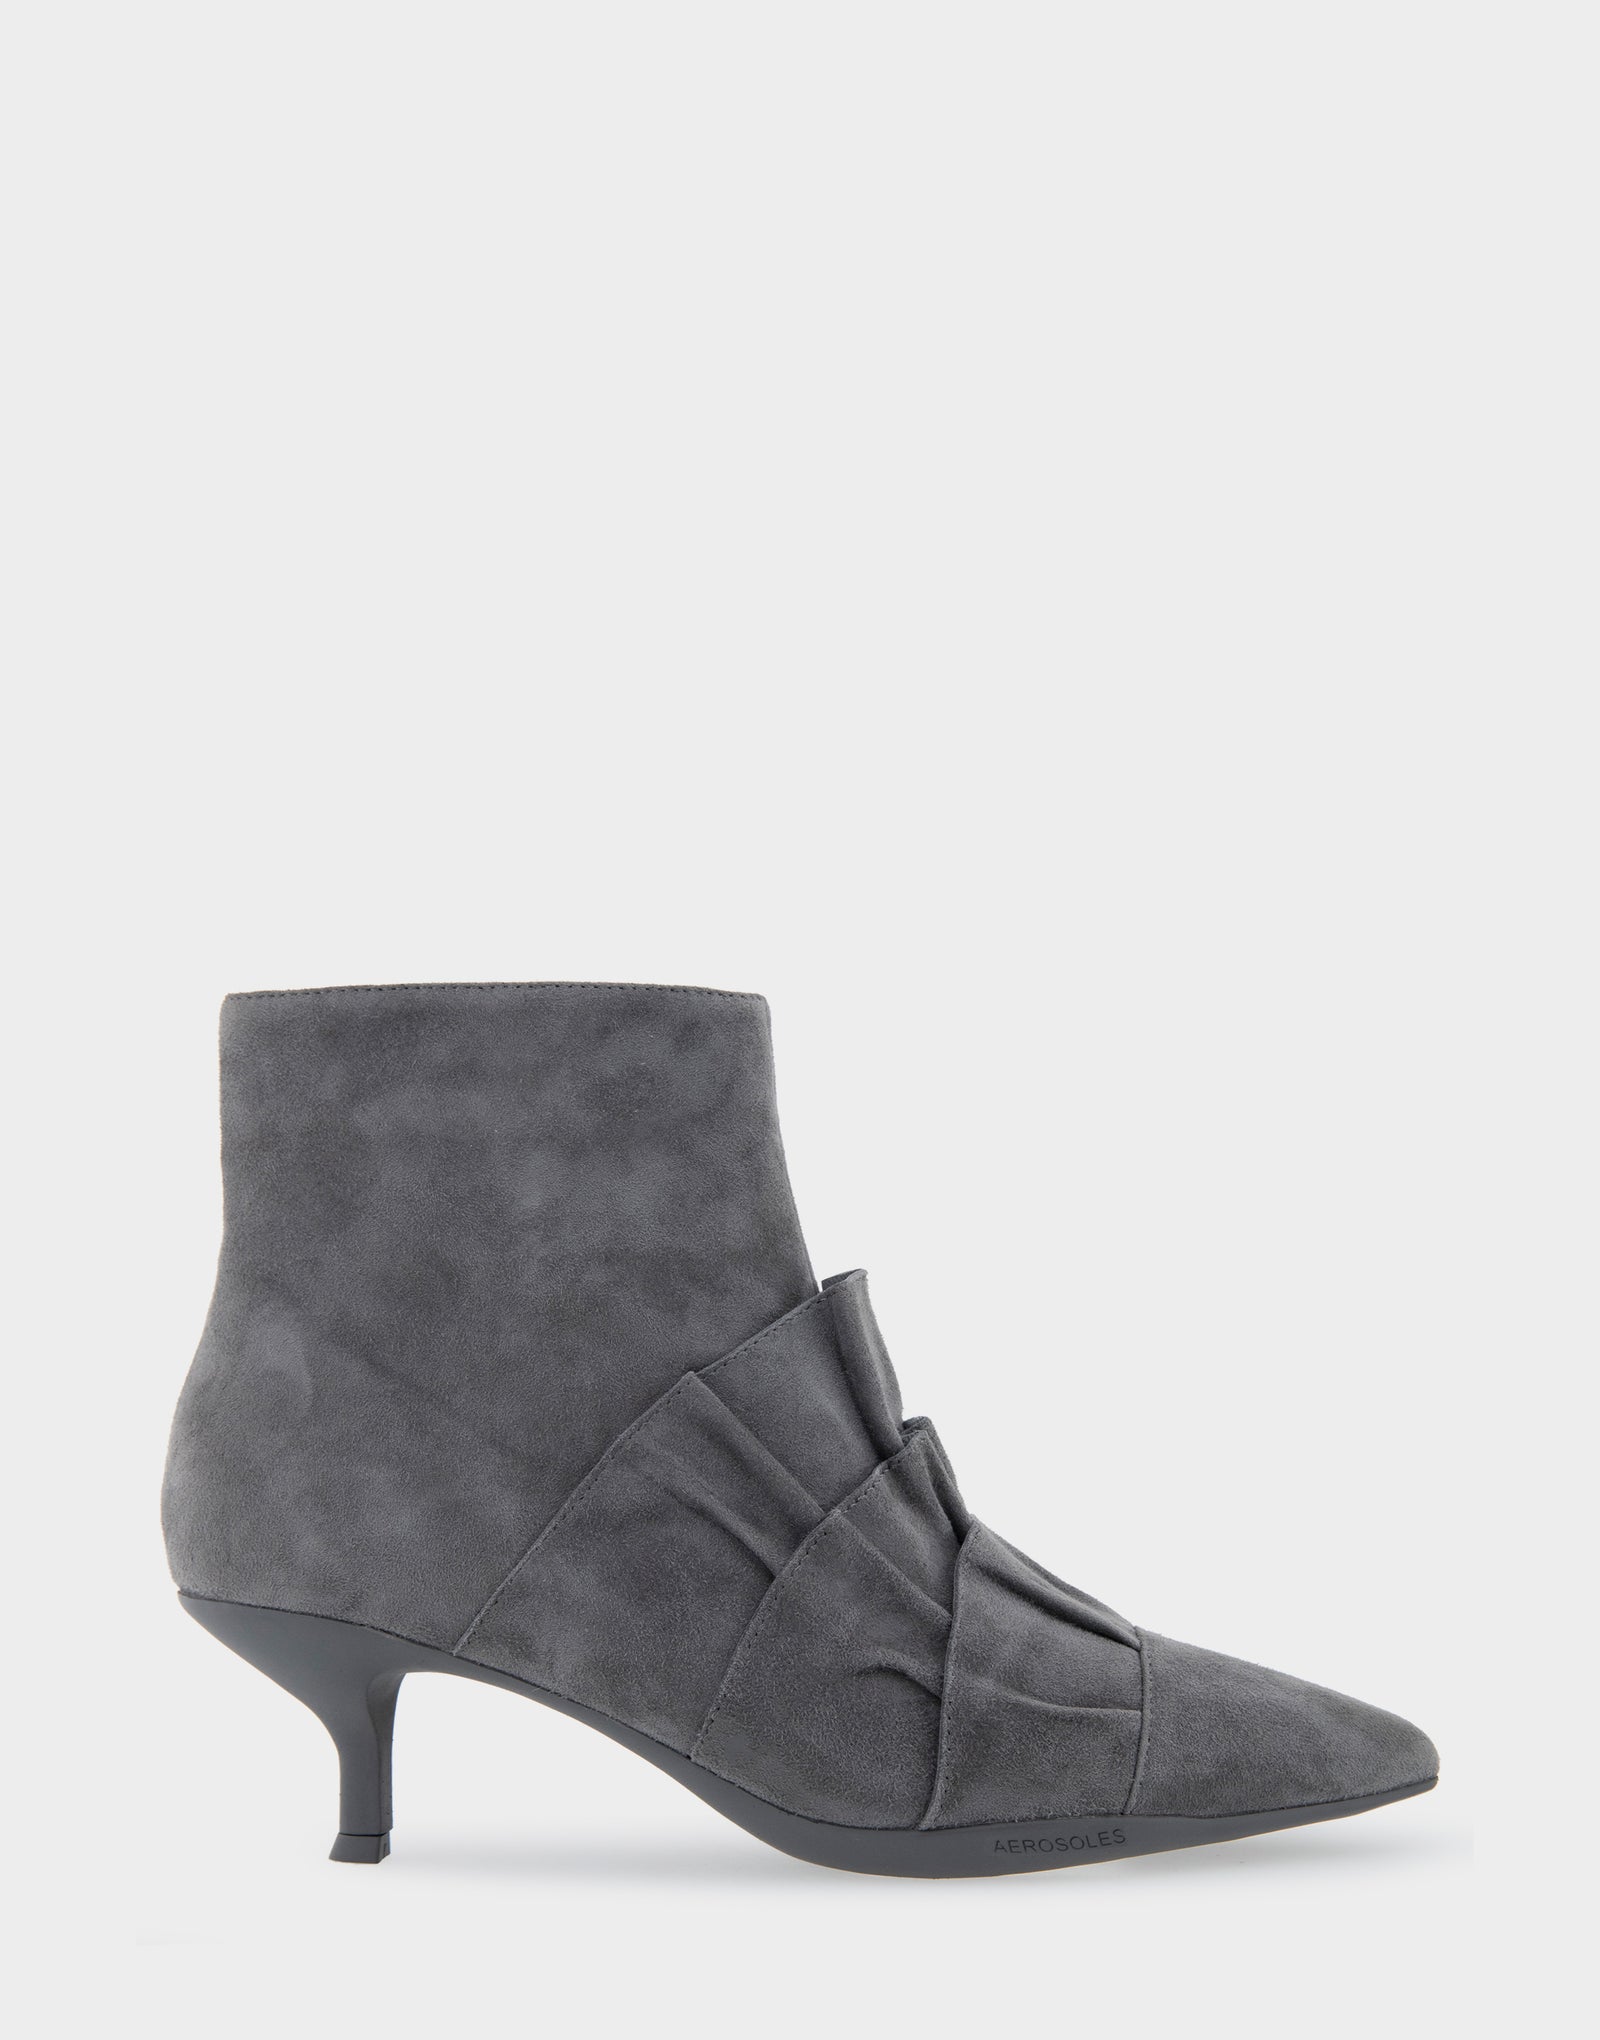 Women's Kitten Heel Ankle Boot in Dark Grey